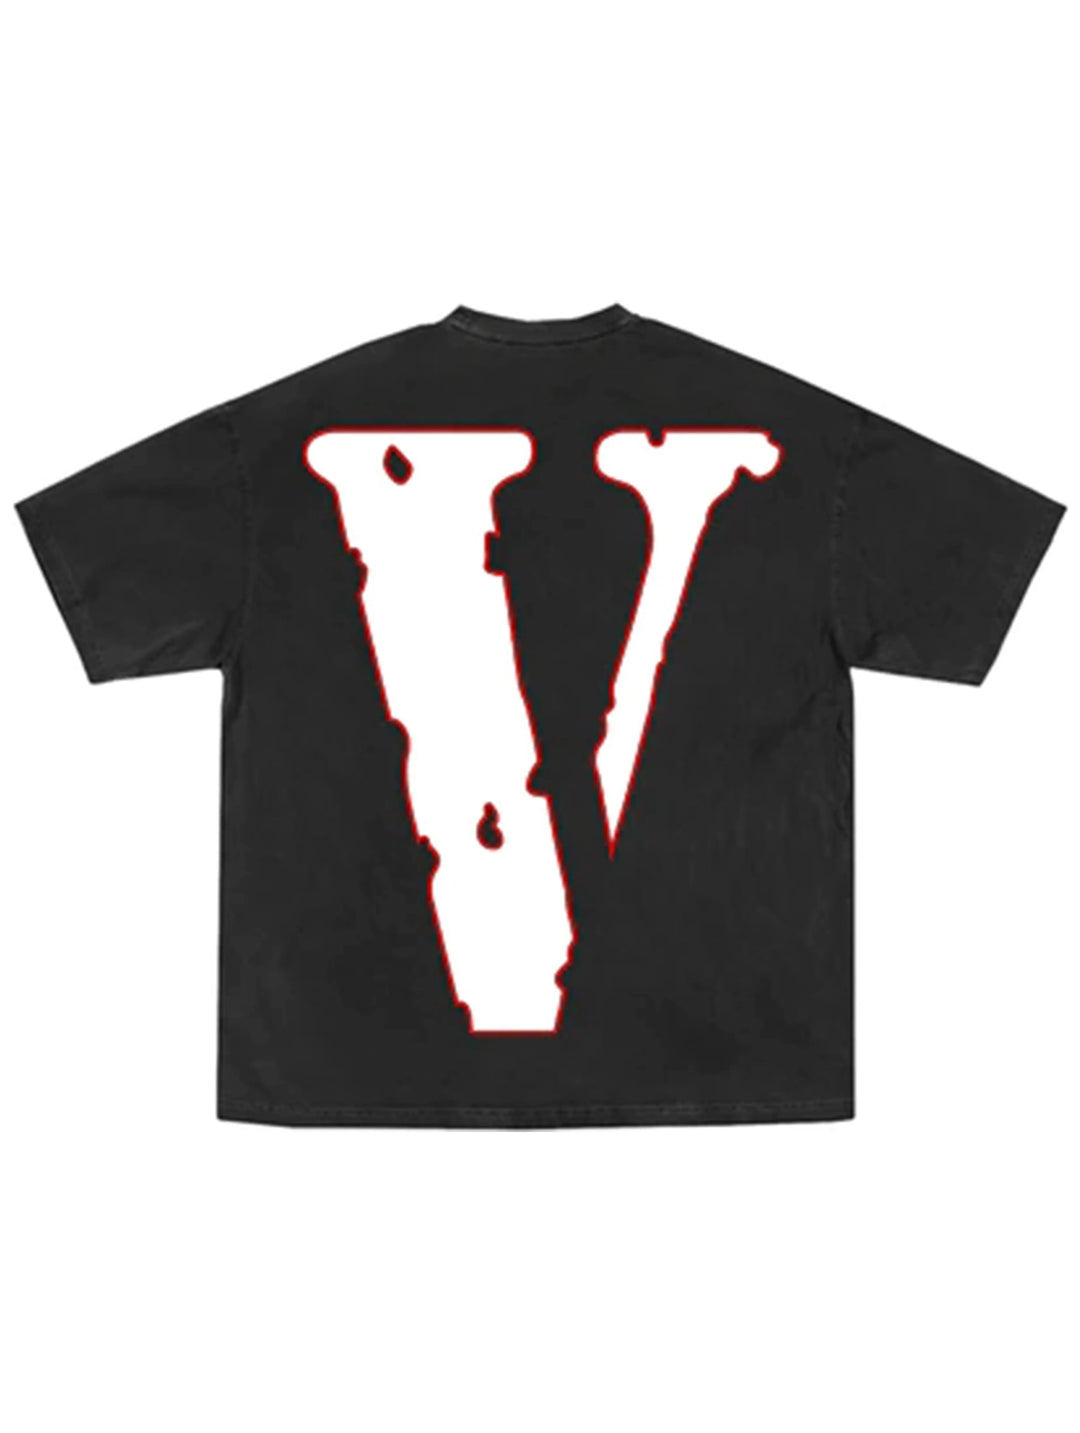 NBA YoungBoy x Vlone Murder Business Tee Black [FW20] Prior